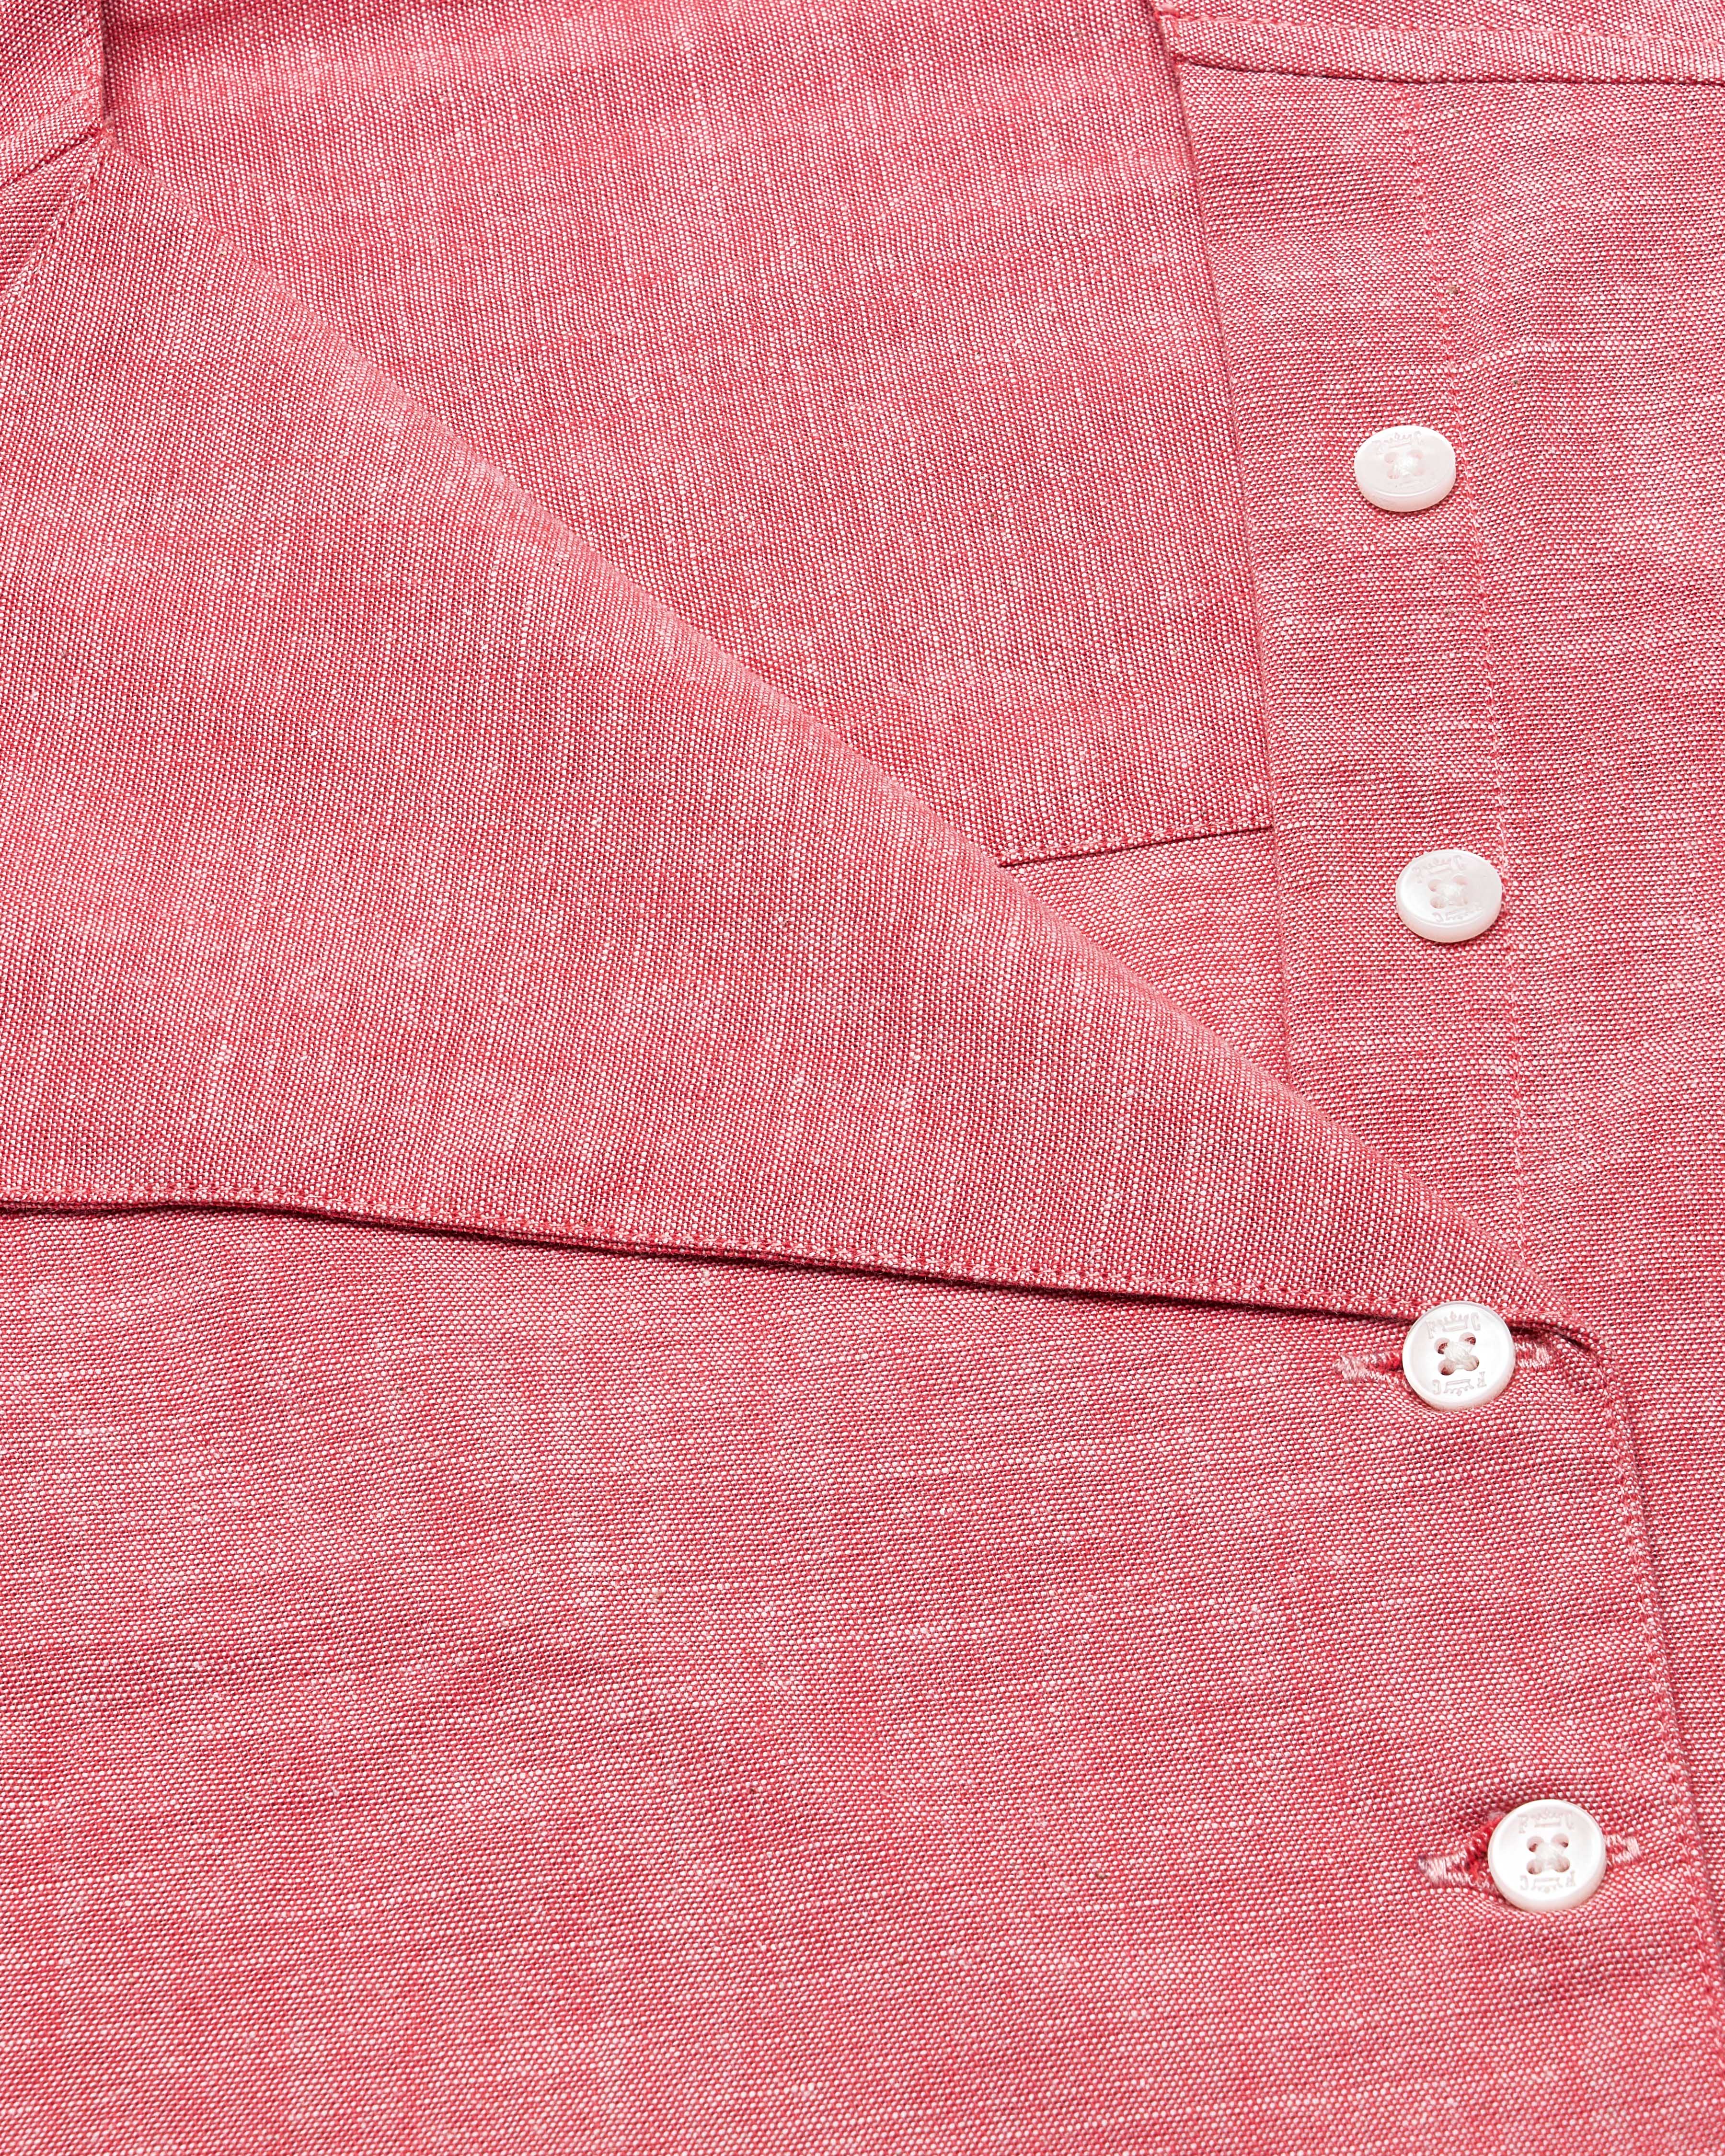 Faded Pink Premium Cotton Shirt WS009-32, WS009-34, WS009-36, WS009-38, WS009-40, WS009-42